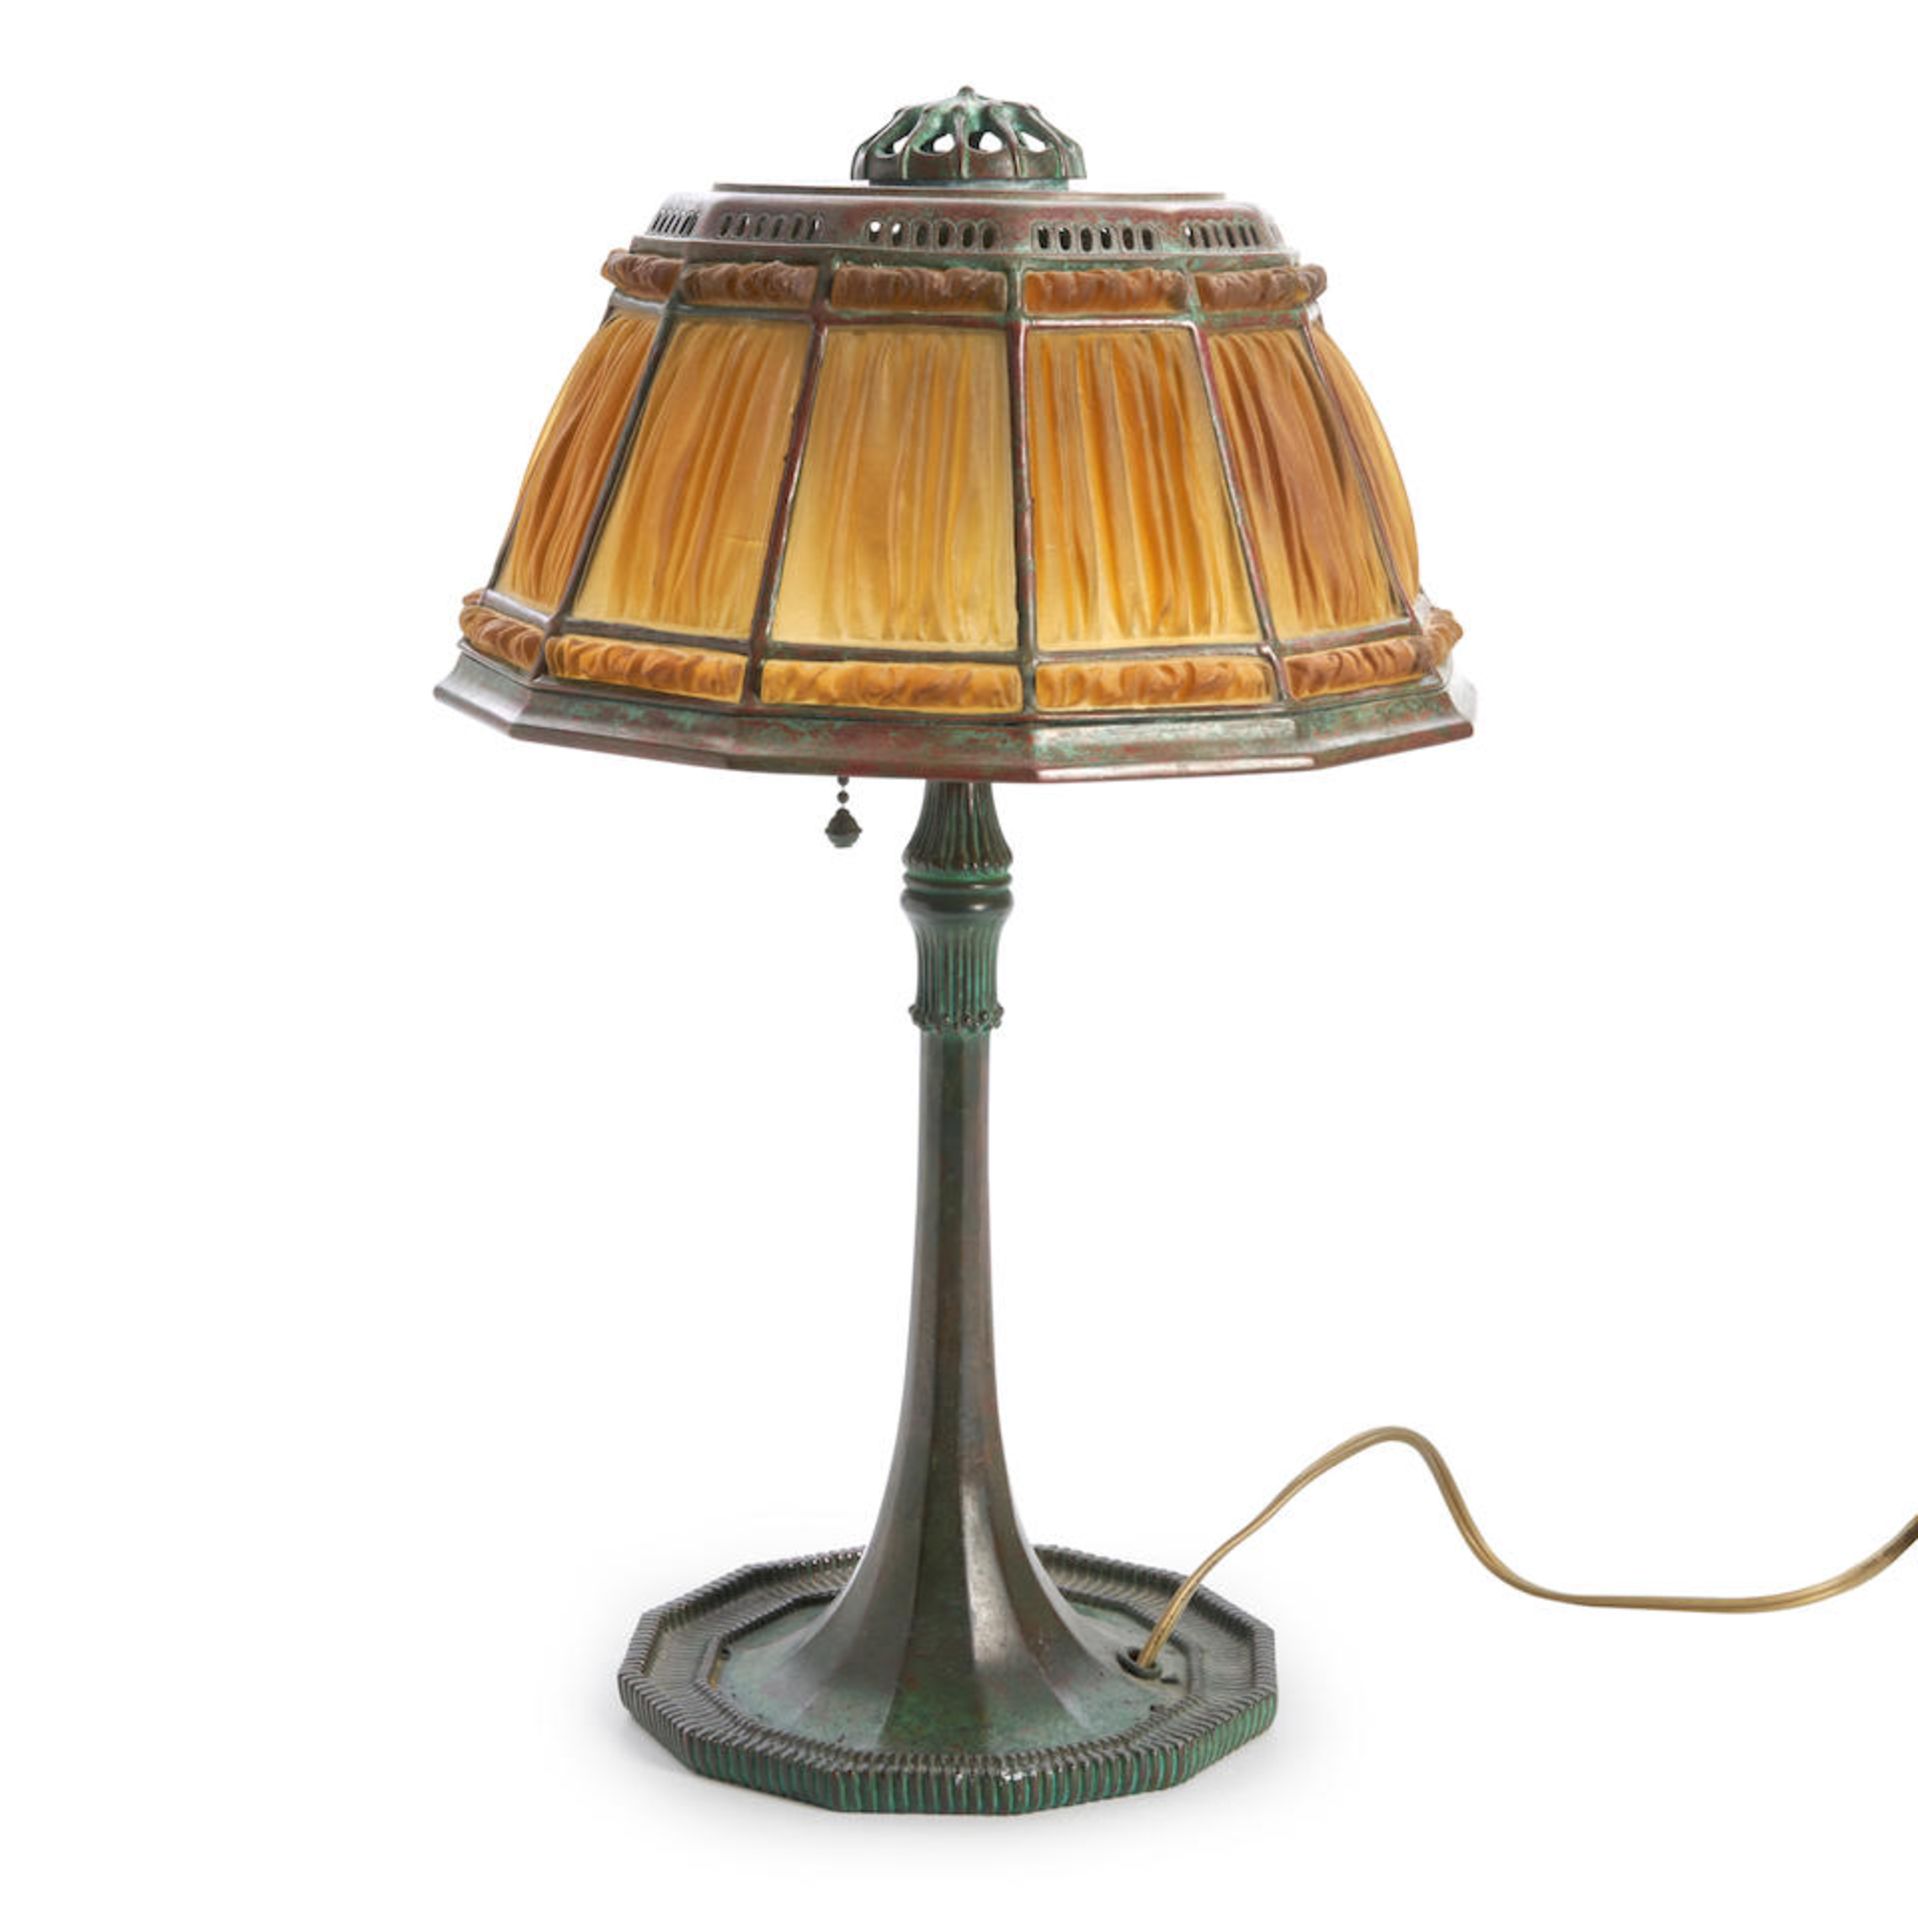 Tiffany Studios Patinated Bronze Desk Lamp with Linen Fold Glass Shade, New York, New York, shad...